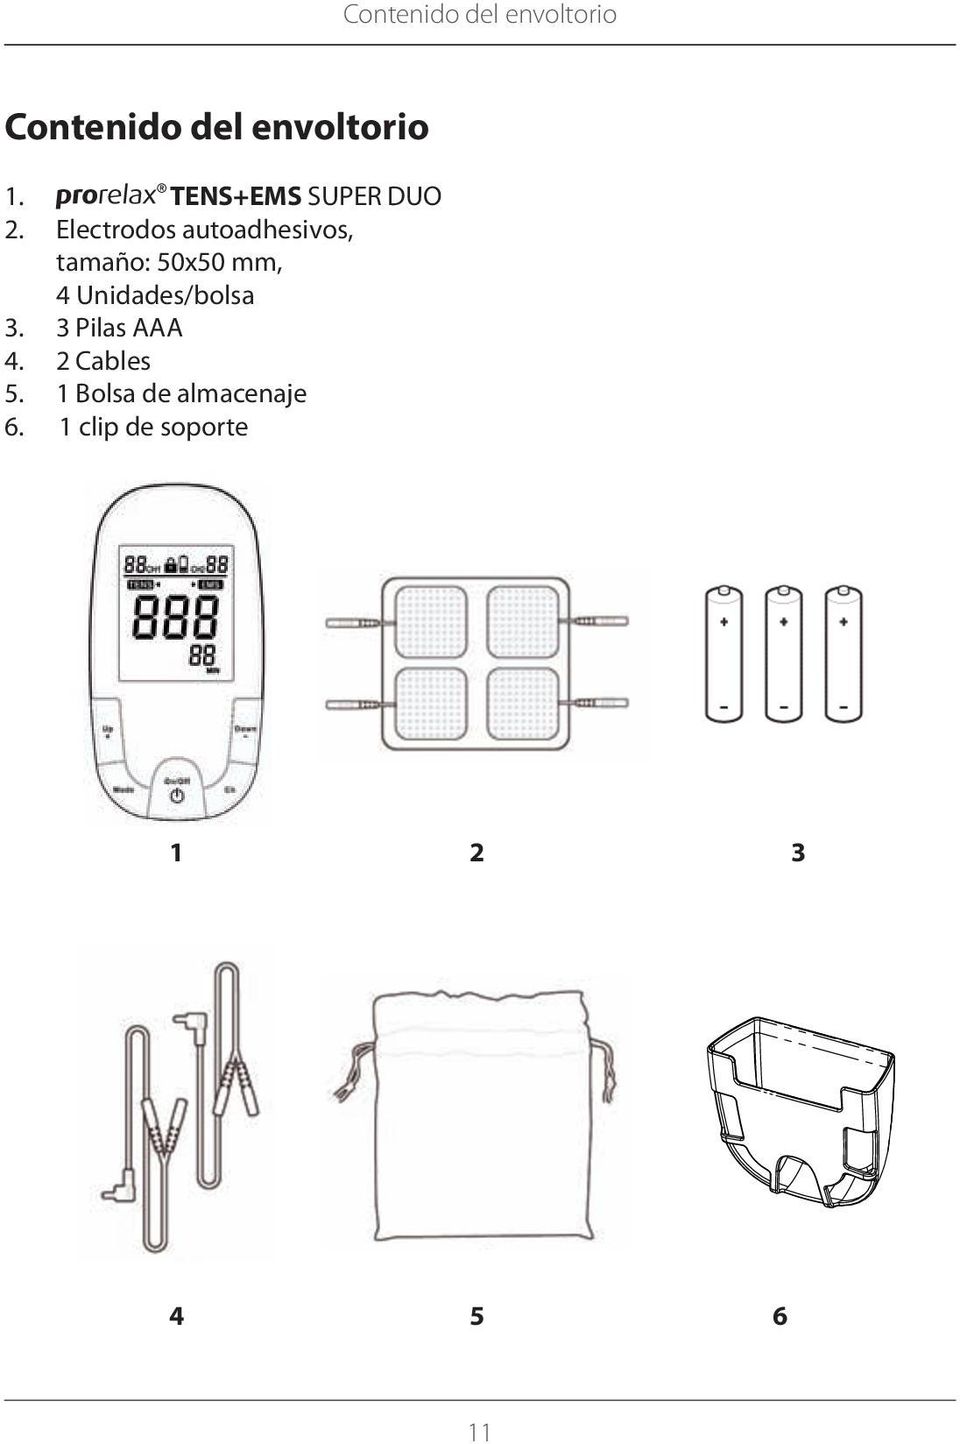 Electrodos autoadhesivos, tamaño: 50x50 mm, 4